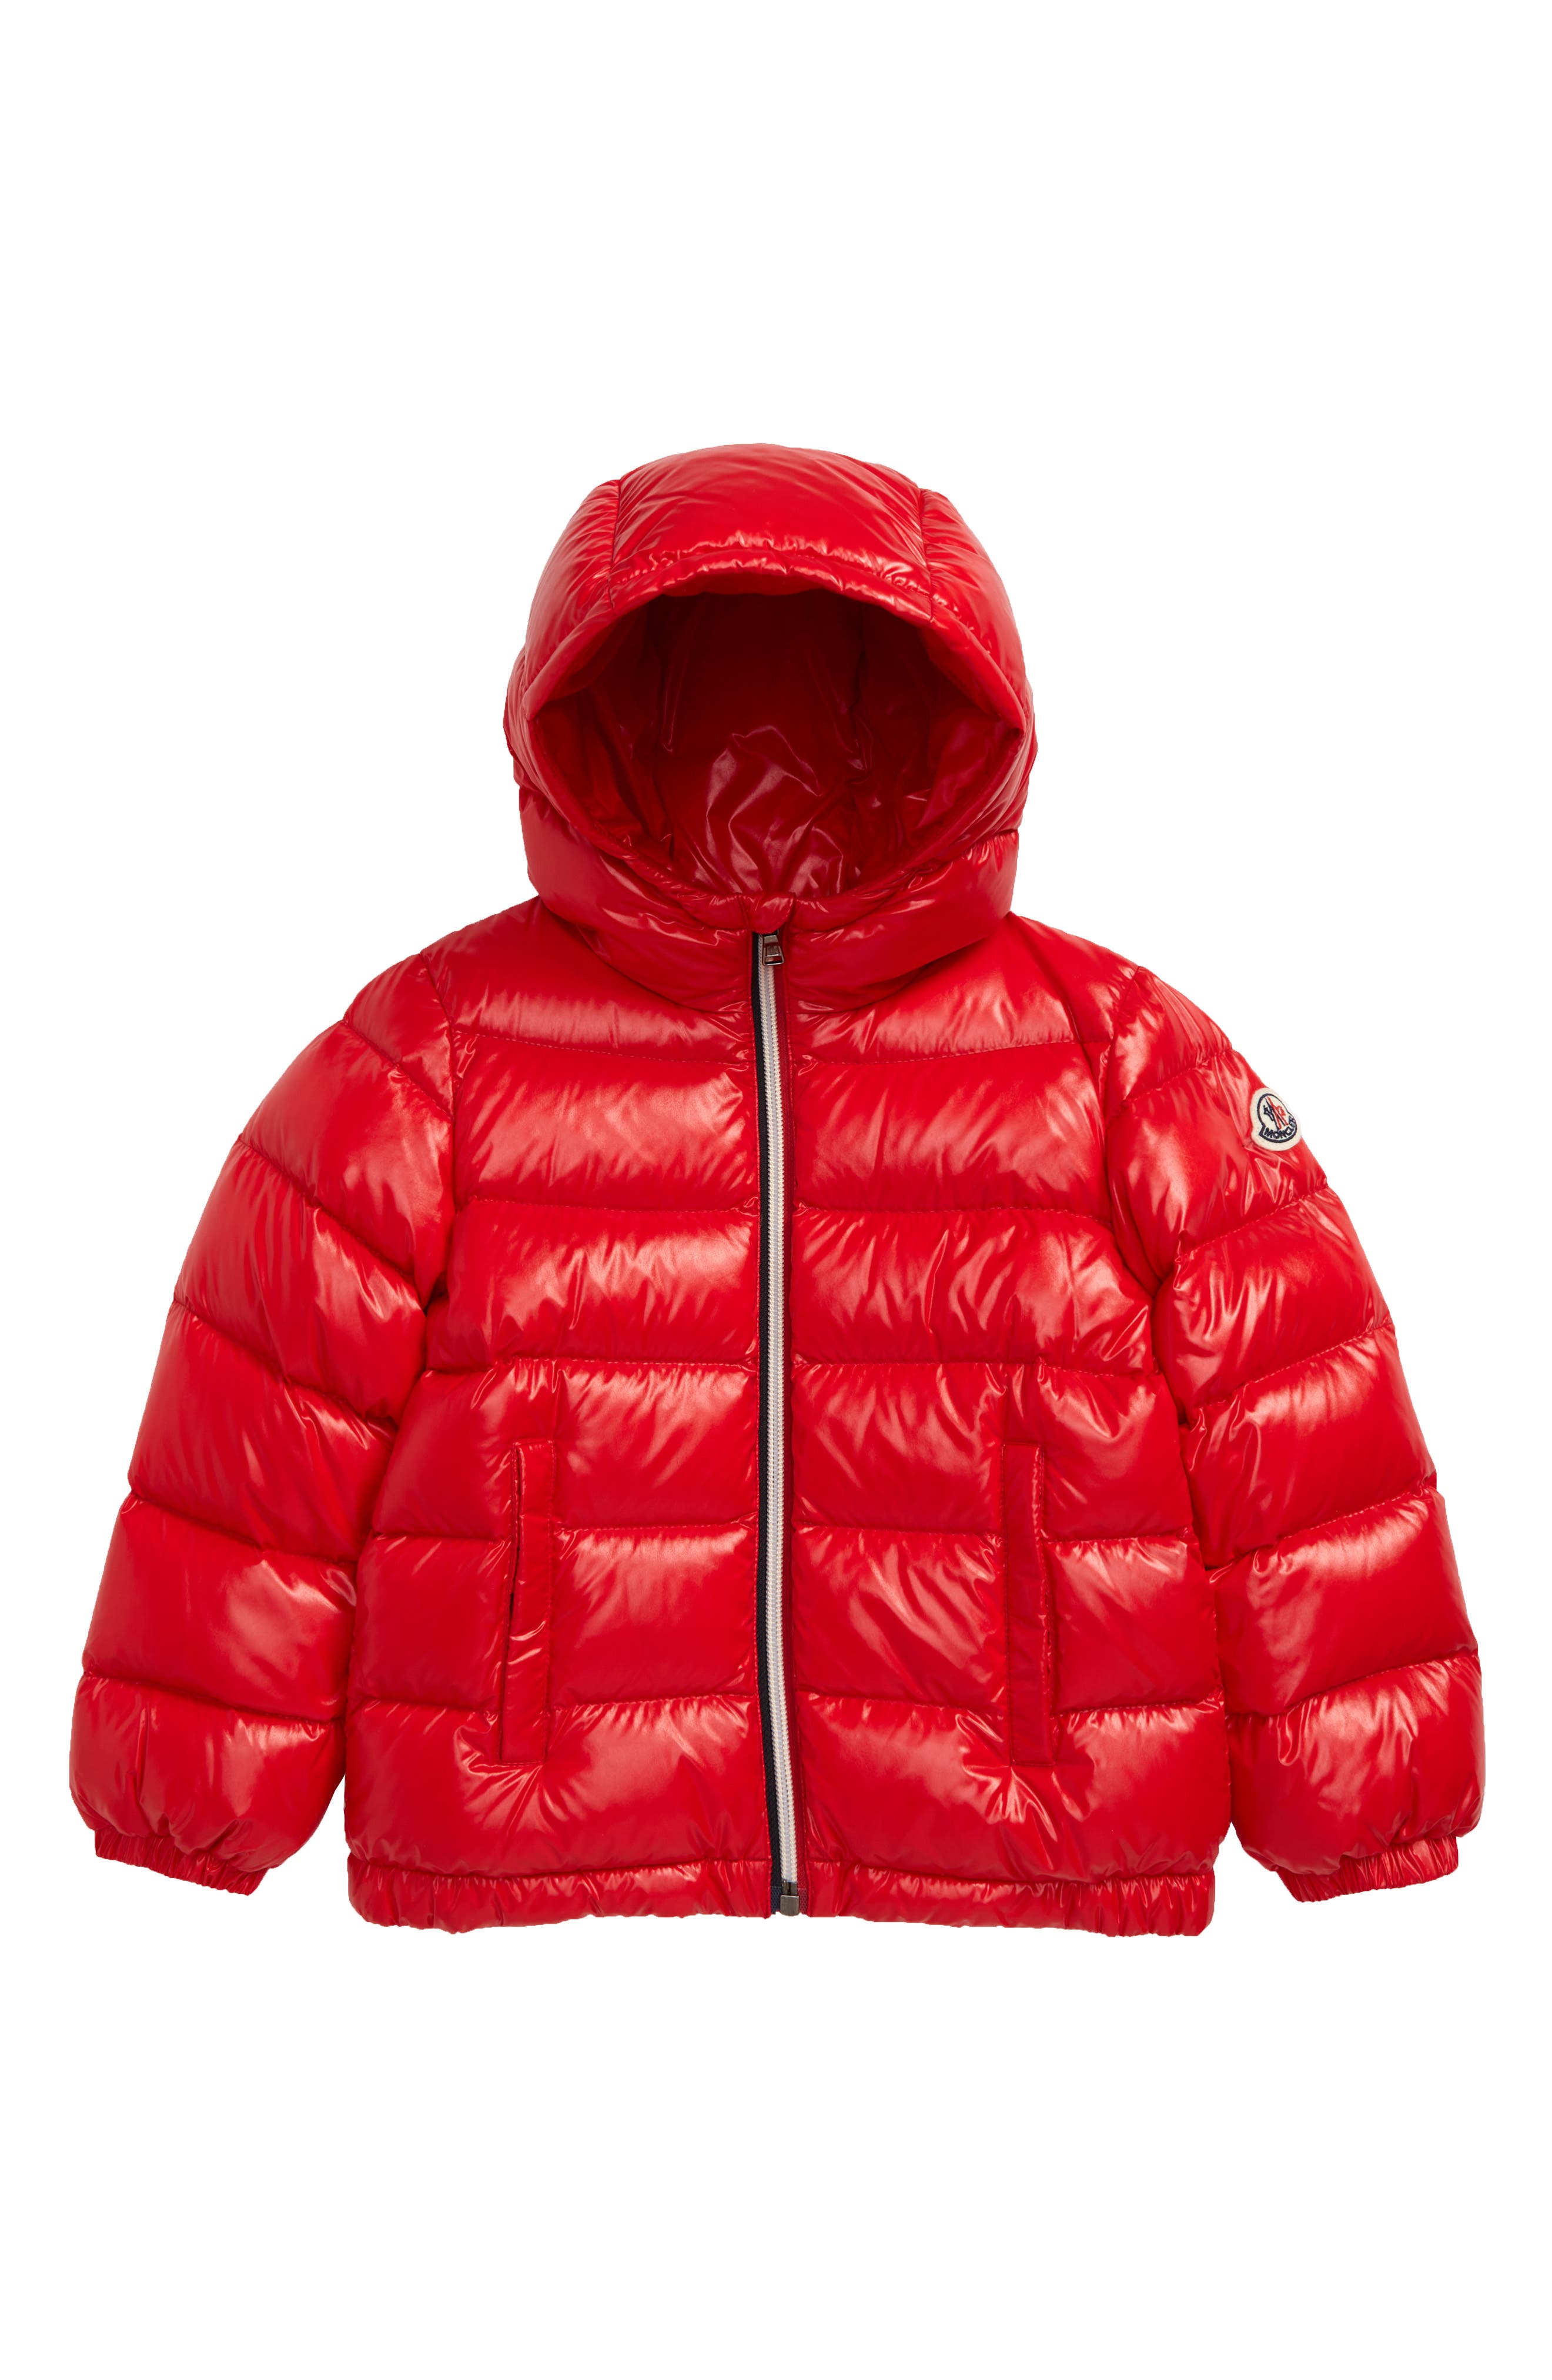 moncler red bubble jacket